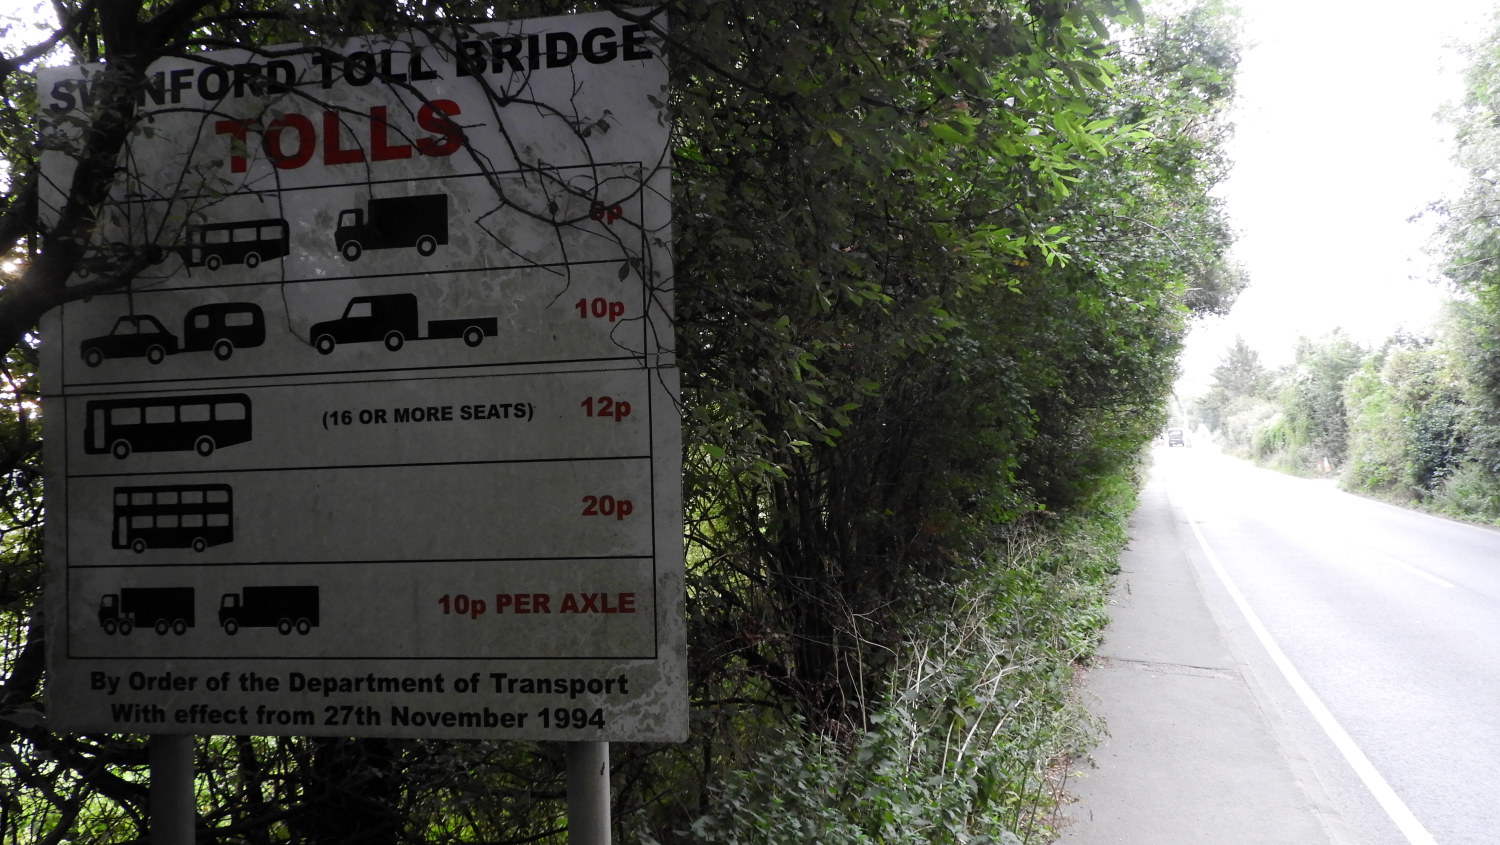 Swinford Bridge Toll Fees